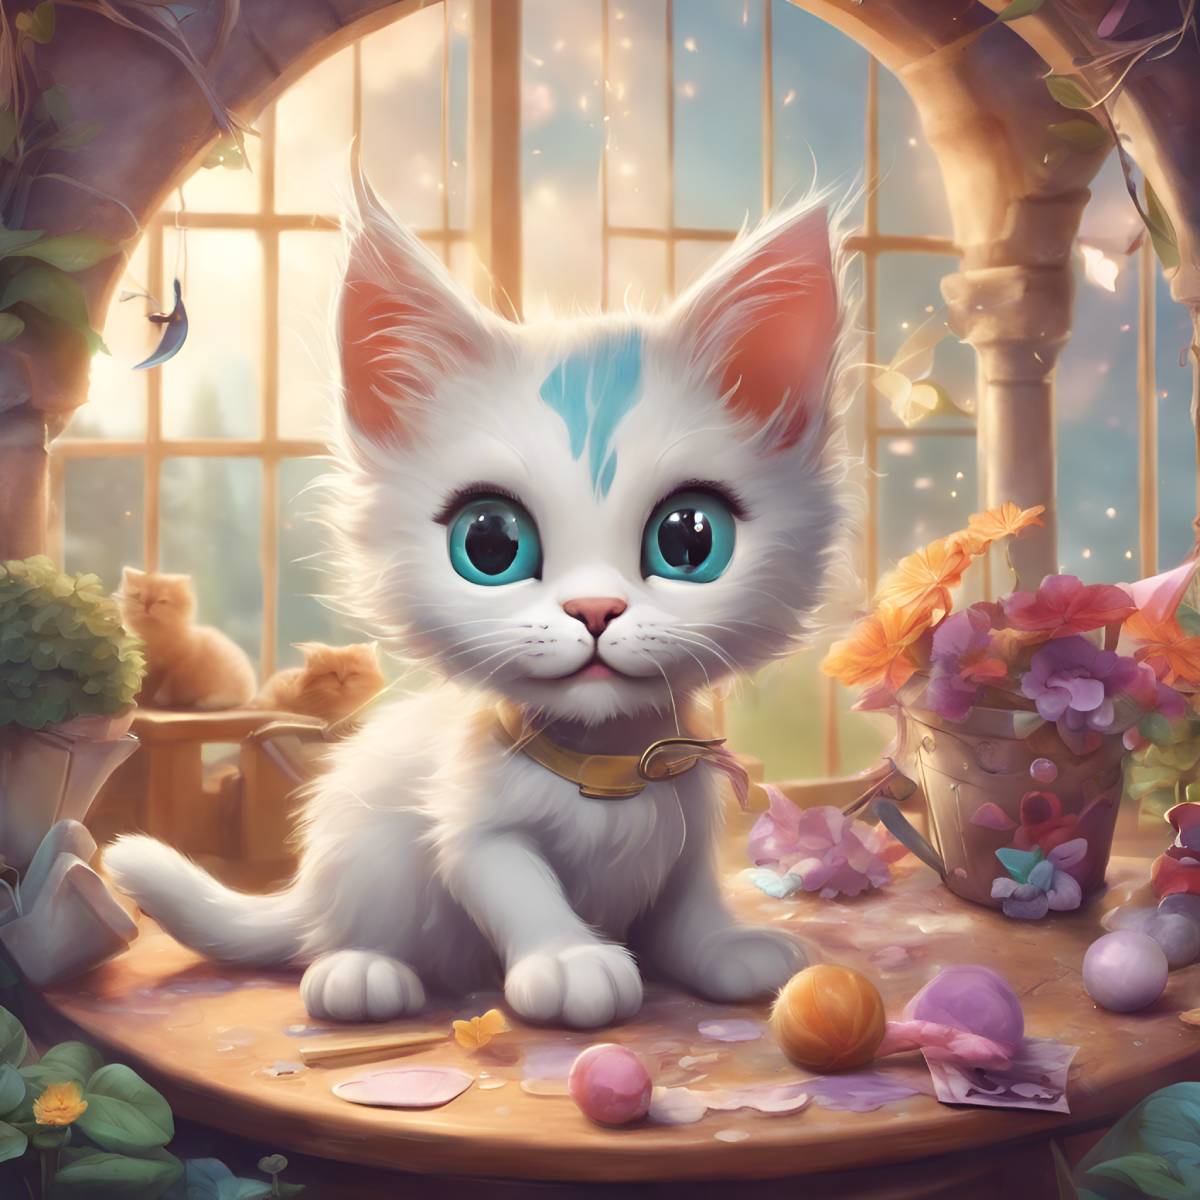 diamantes-mago-kits-de-pintura-de-diamantes-Animales-Gato-Whimsical-Kitten-Fantasy-original.jpg